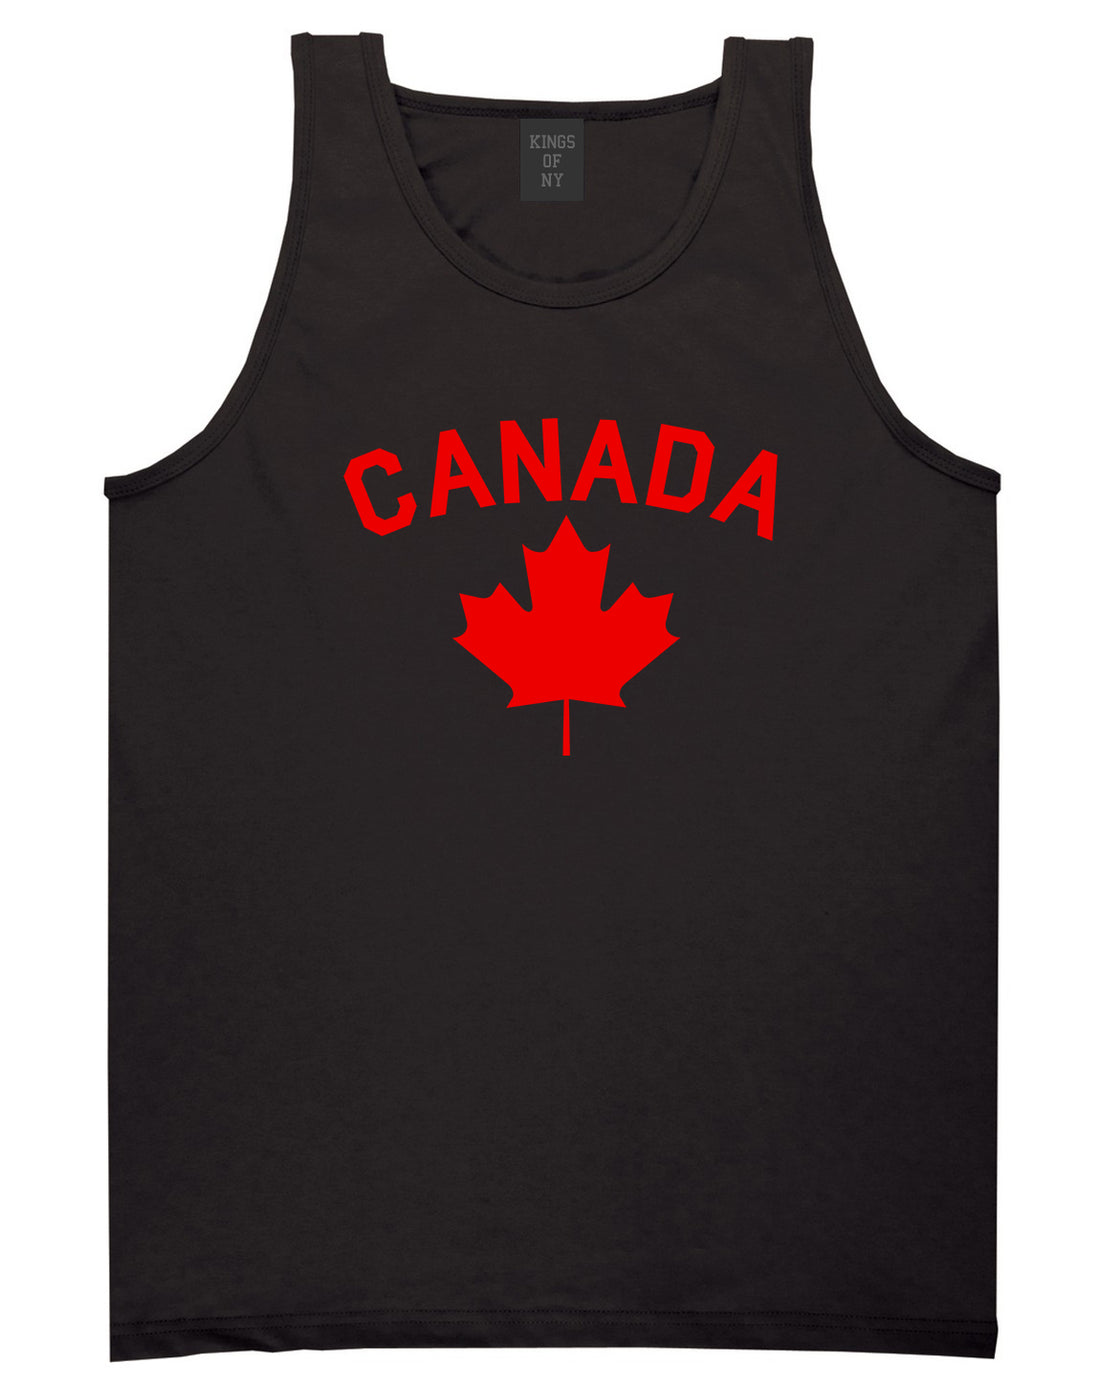 Canada Maple Leaf Red Mens Tank Top Shirt Black